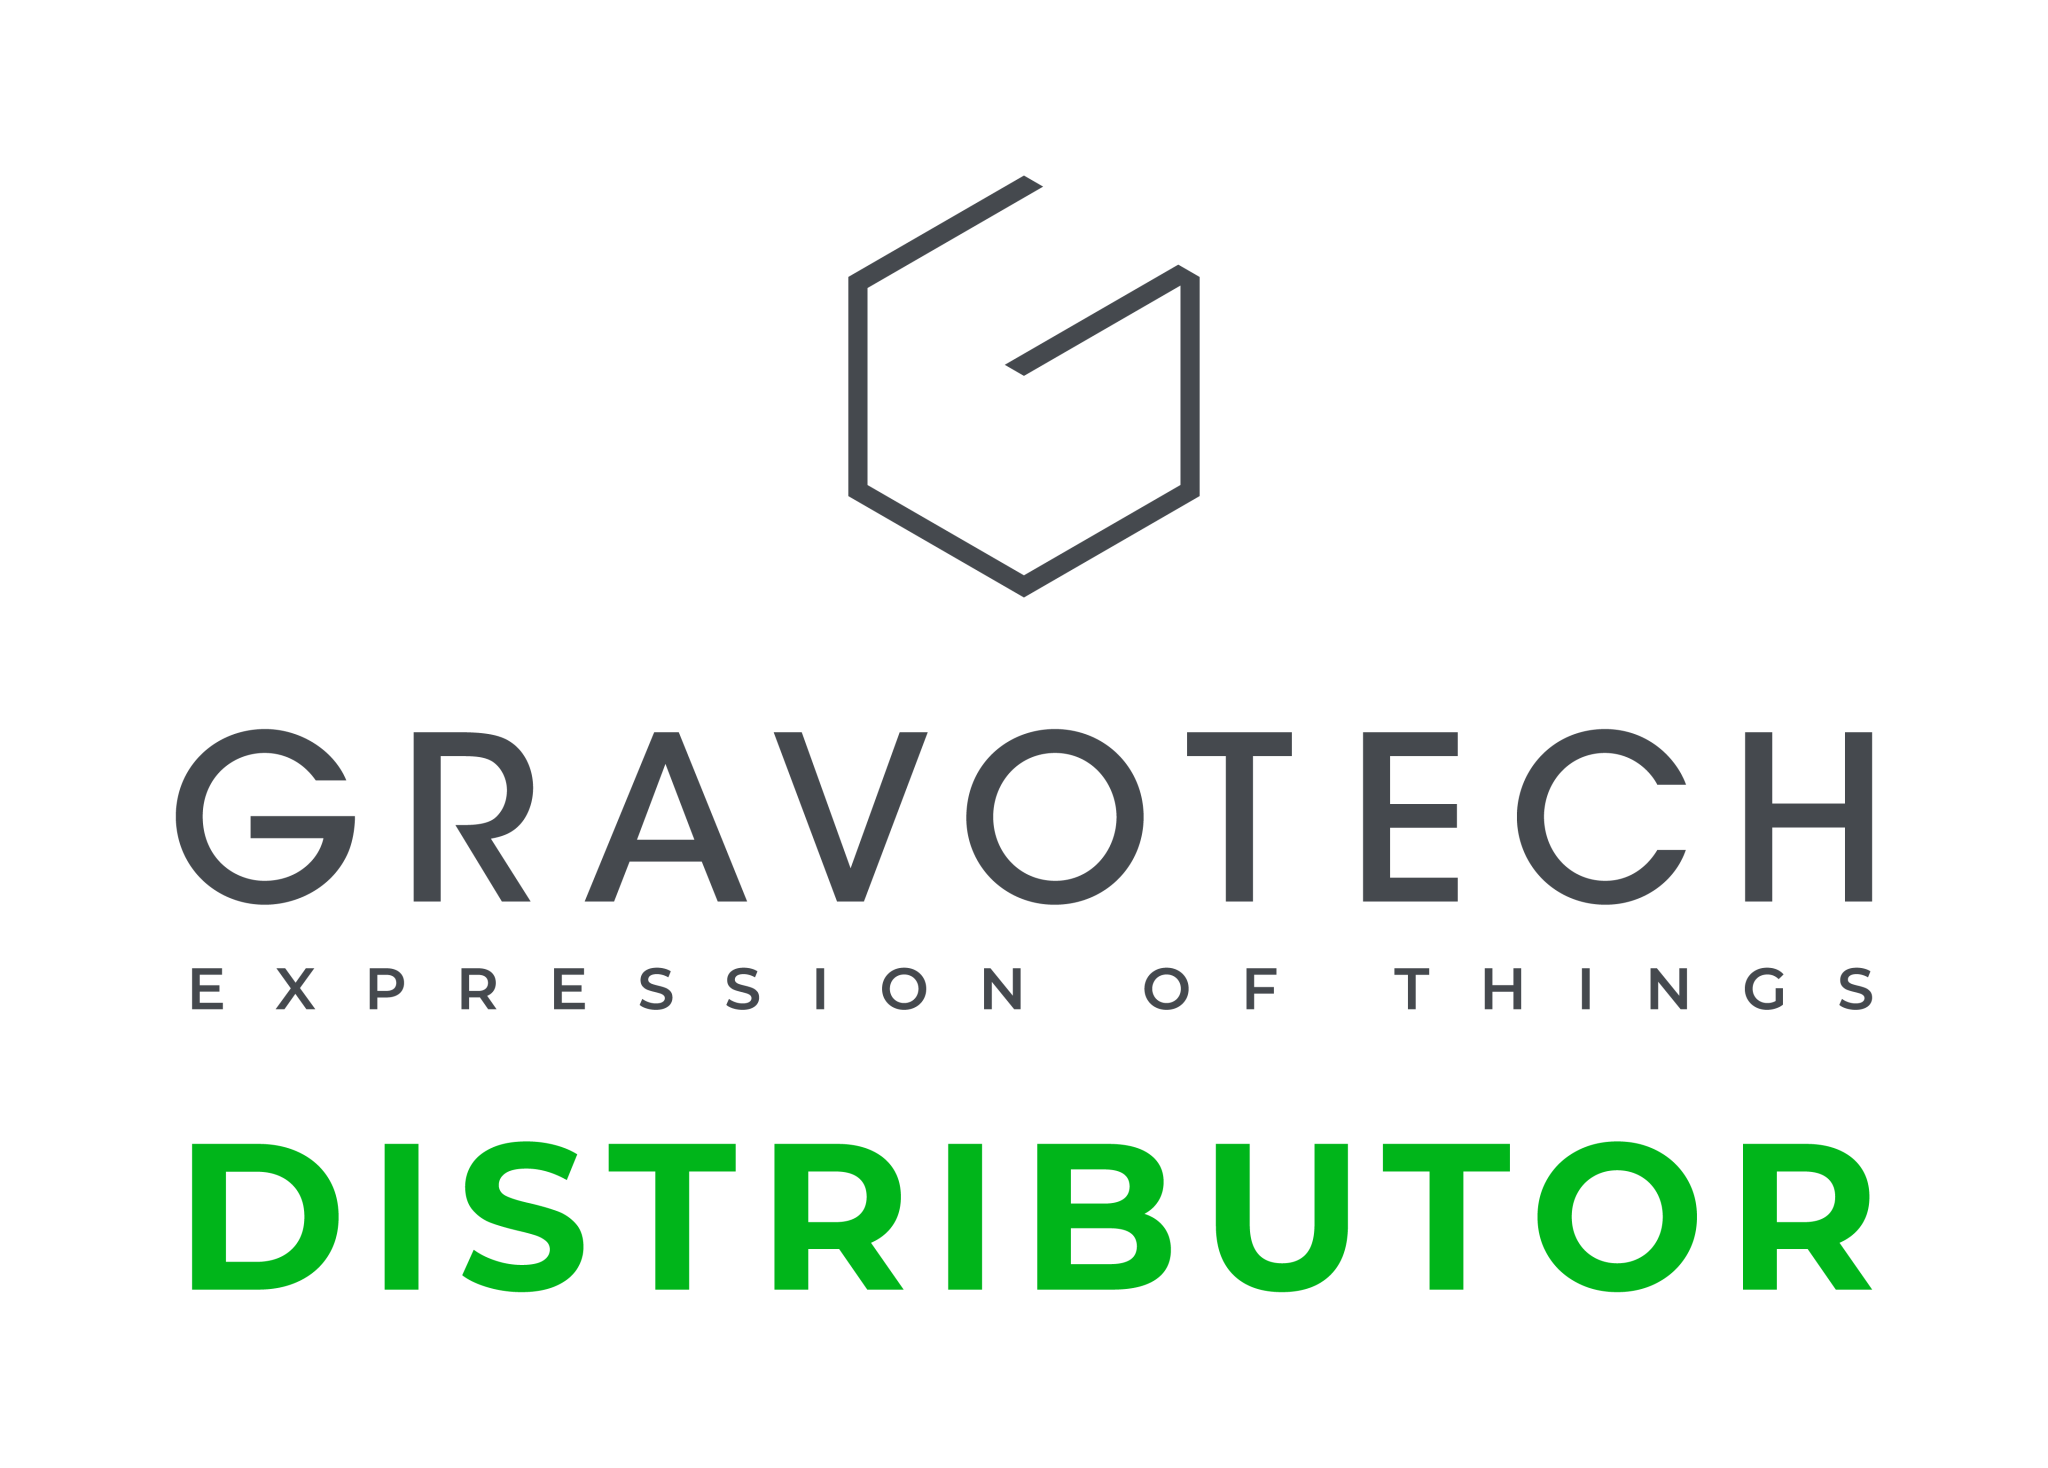 Gravotech distributor